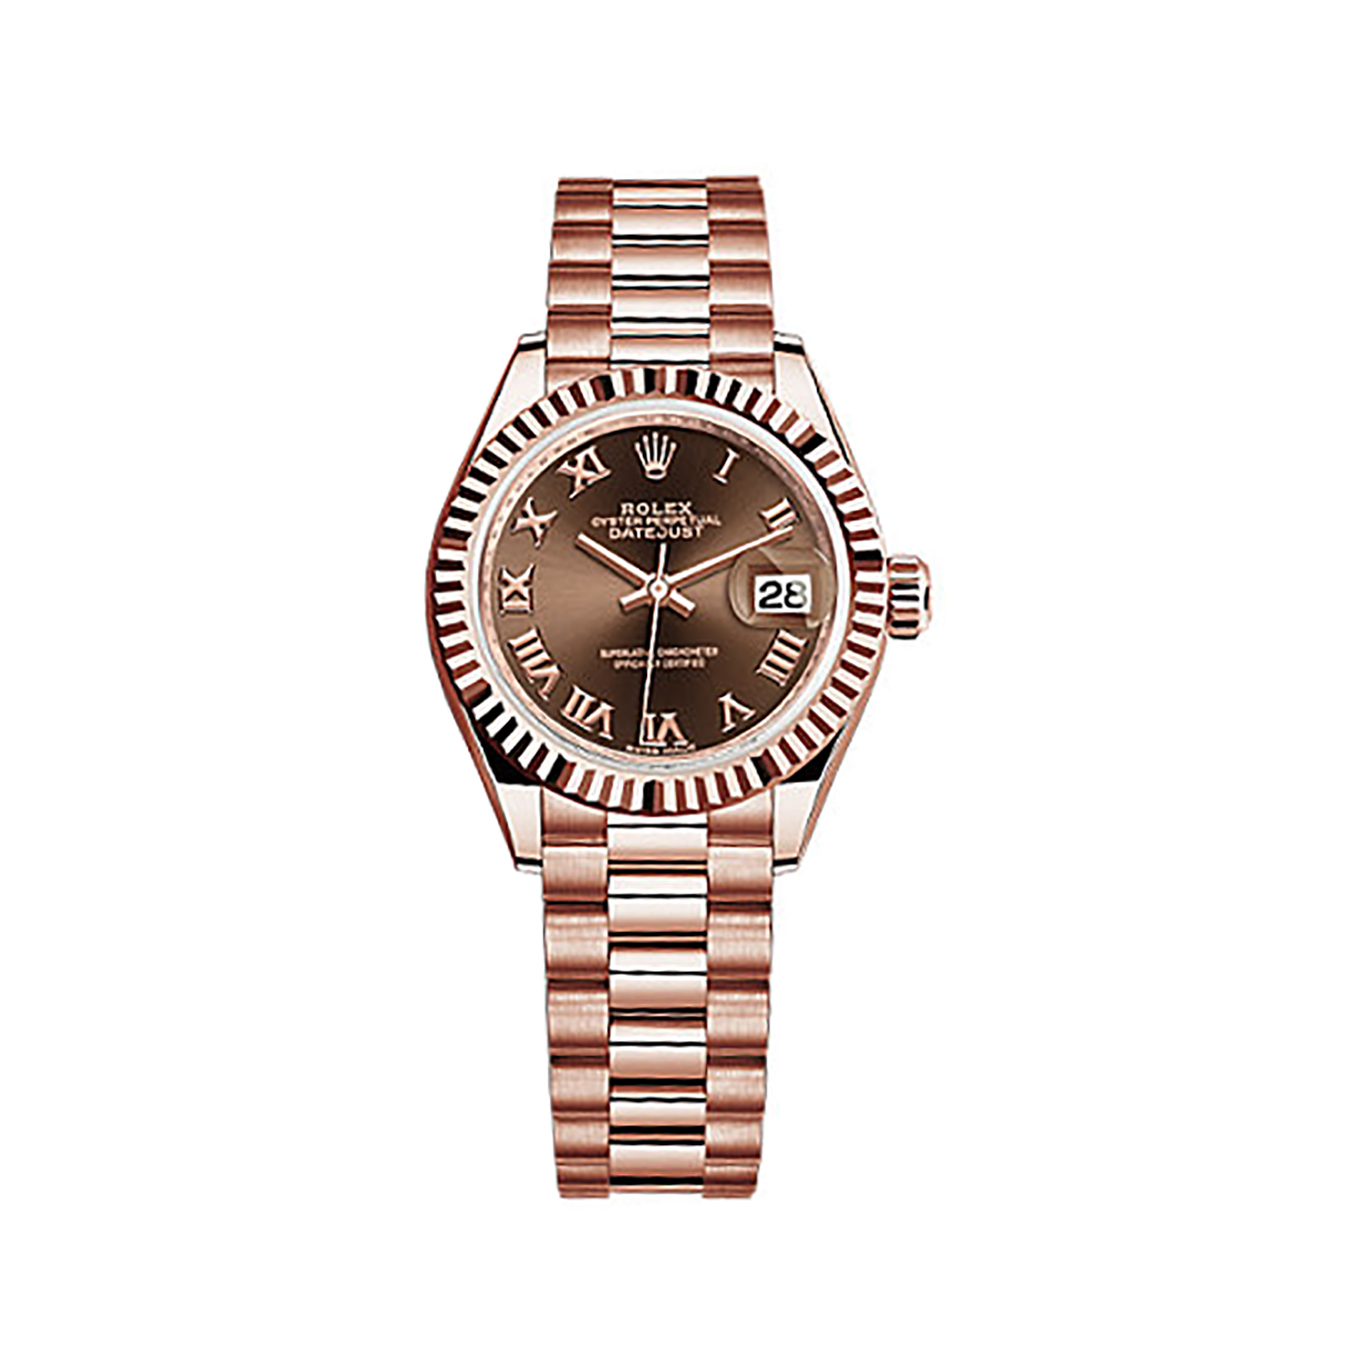 Lady-Datejust 28 279175 Rose Gold Watch (Chocolate)